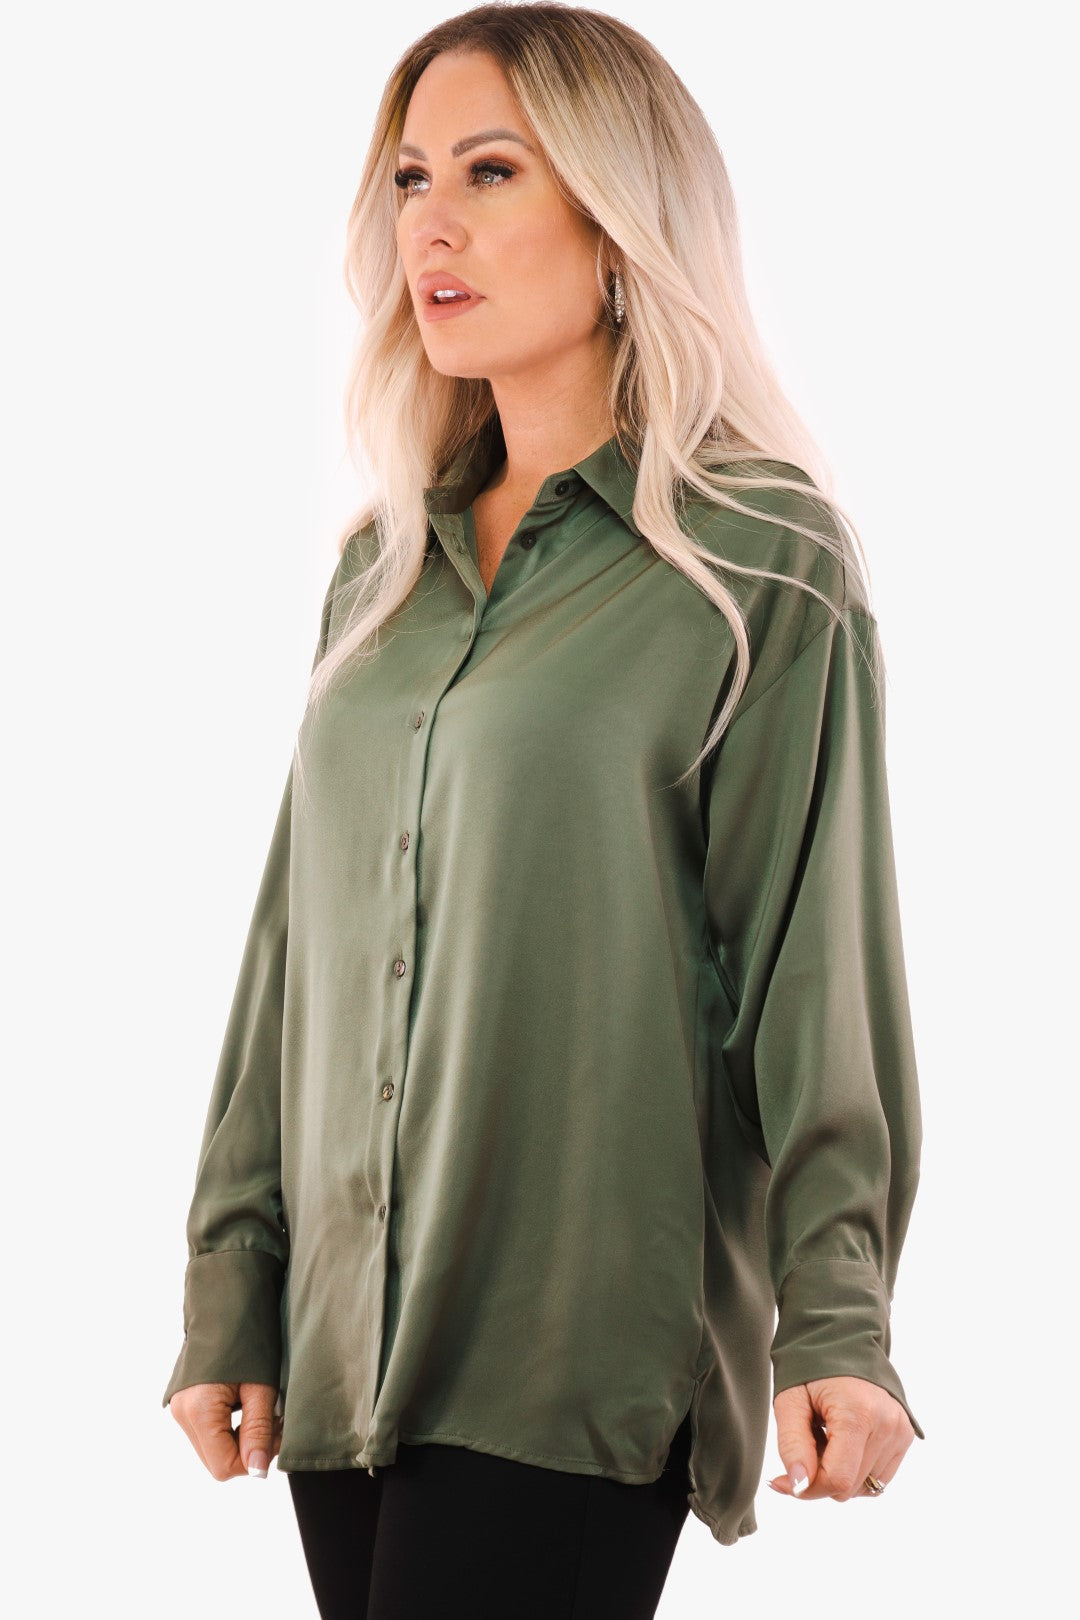 Esqualo blouse in Olive color